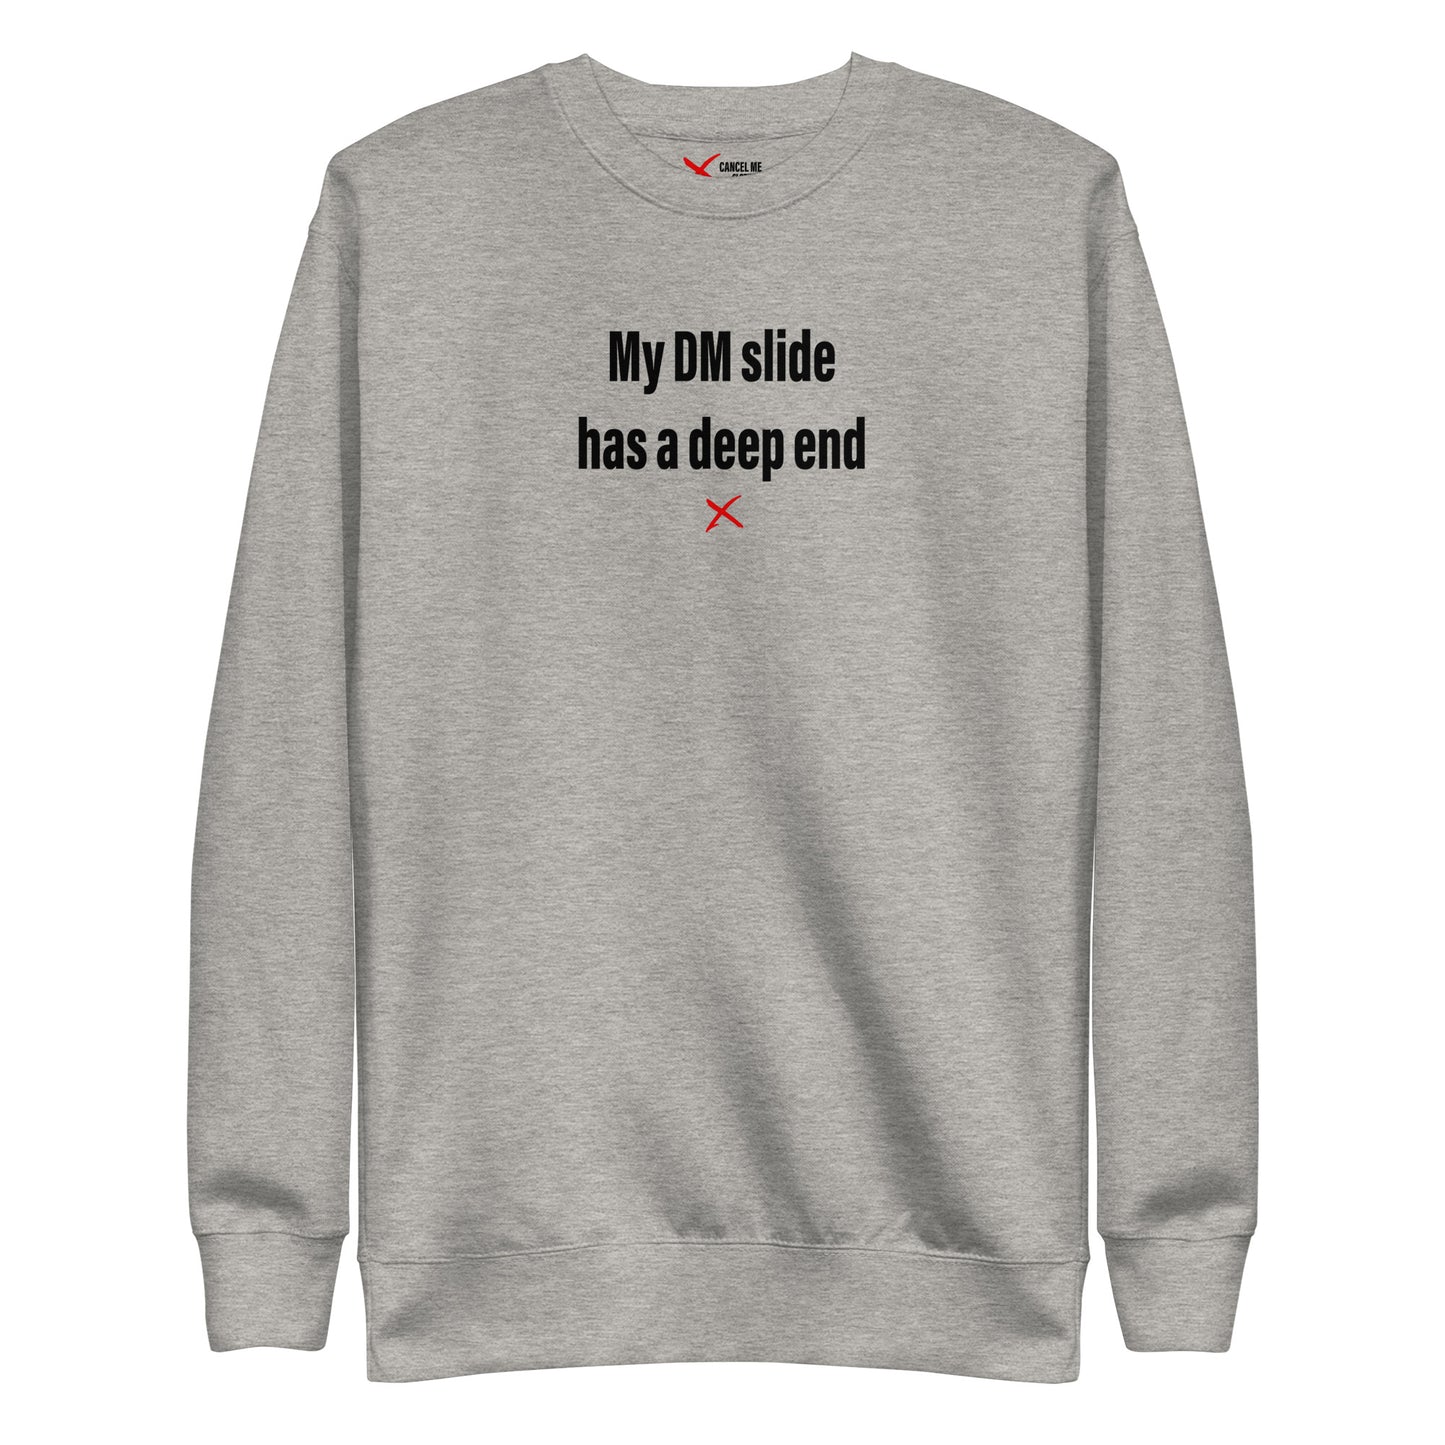 My DM slide has a deep end - Sweatshirt